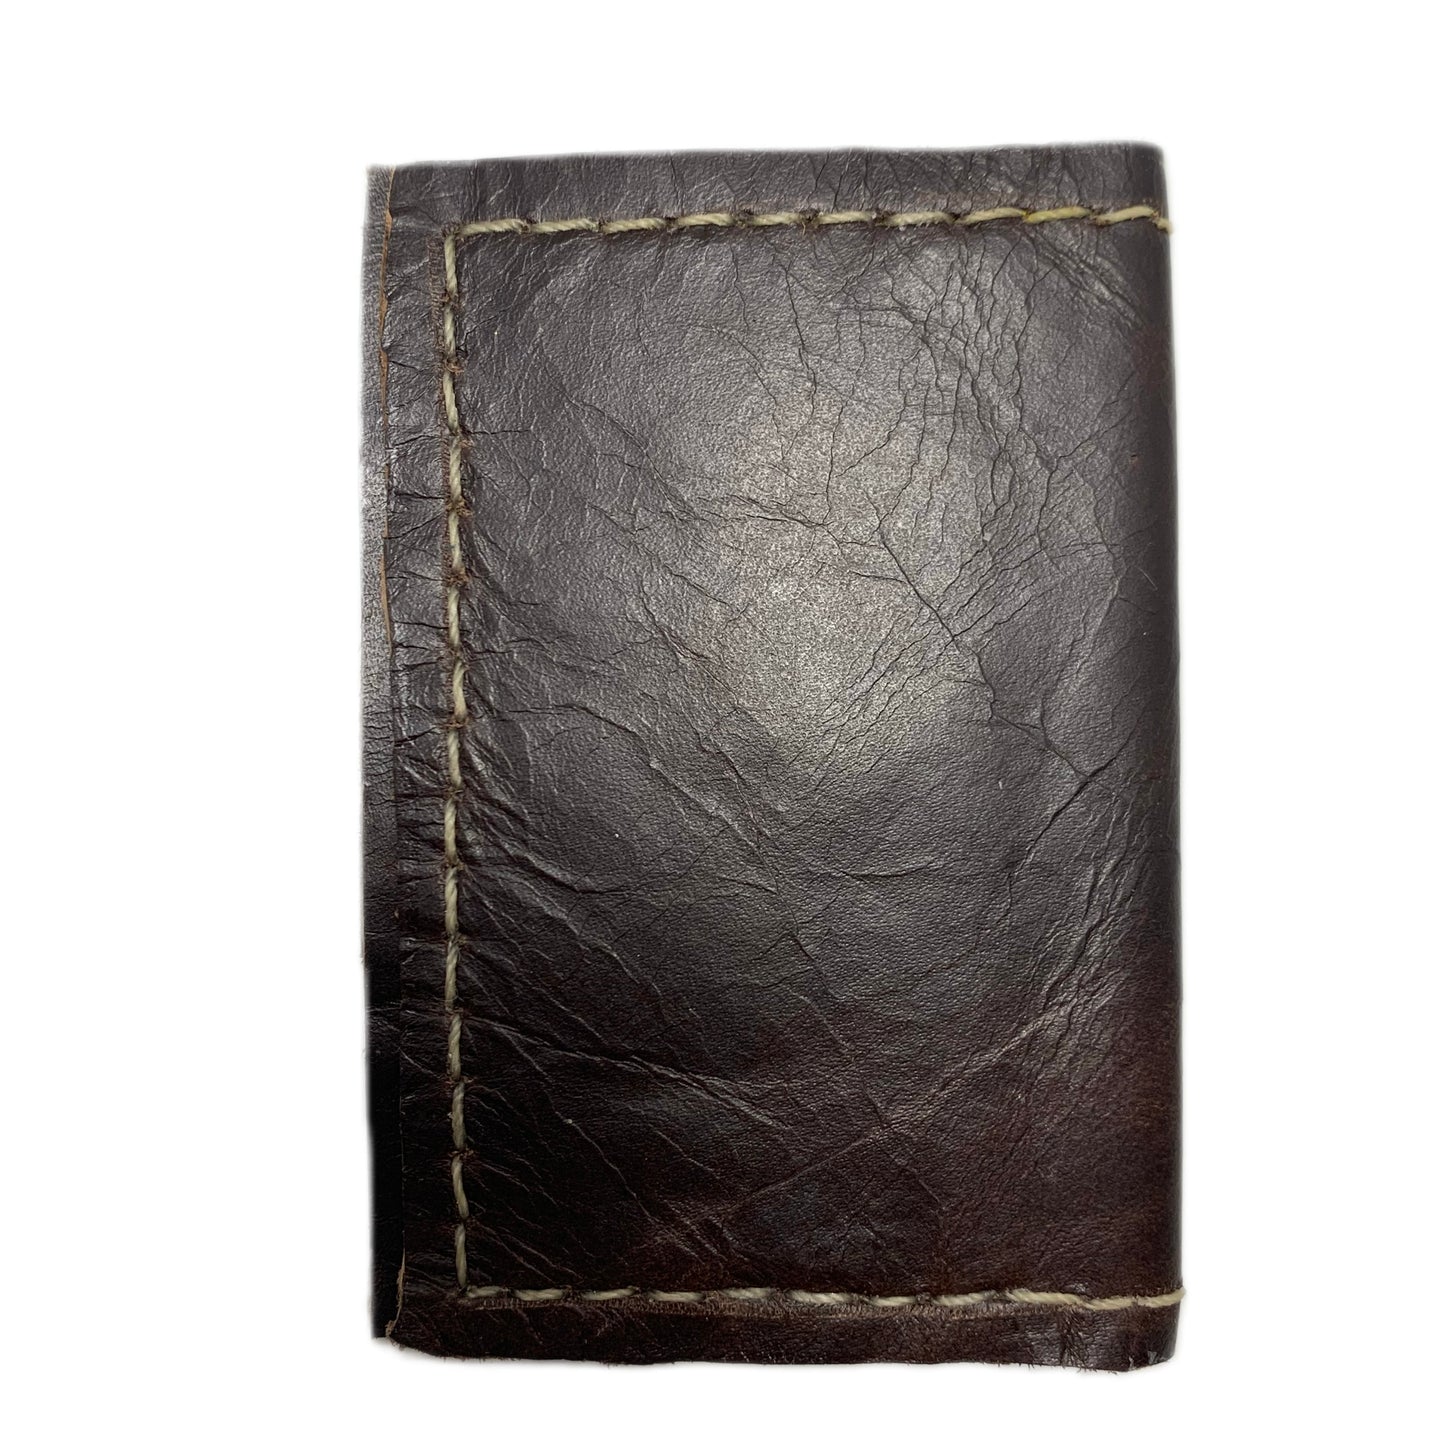 JCAnda Leather Wallet: Navy